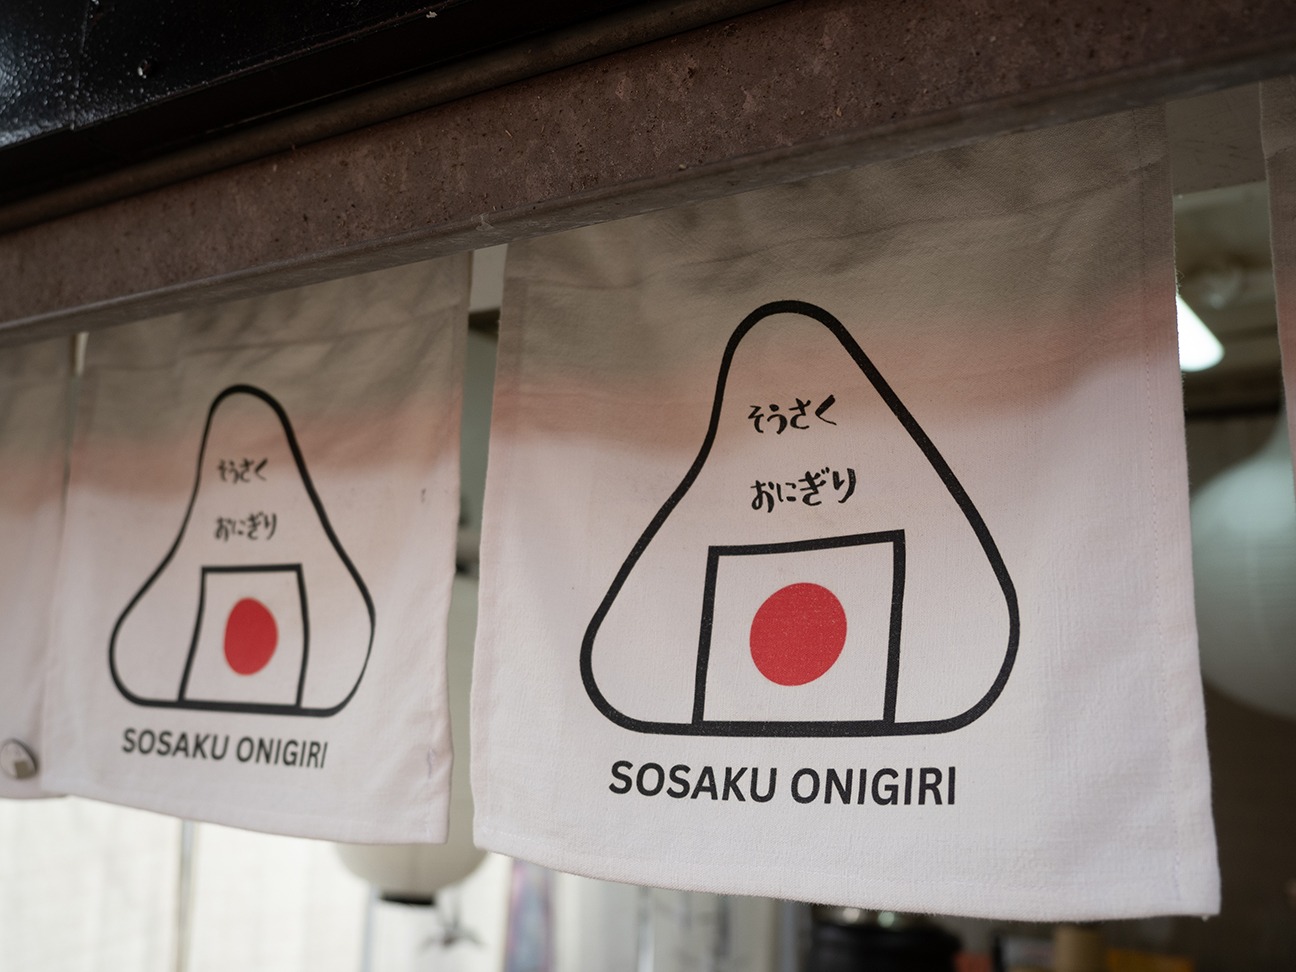 Sosaku onigiri stall sign